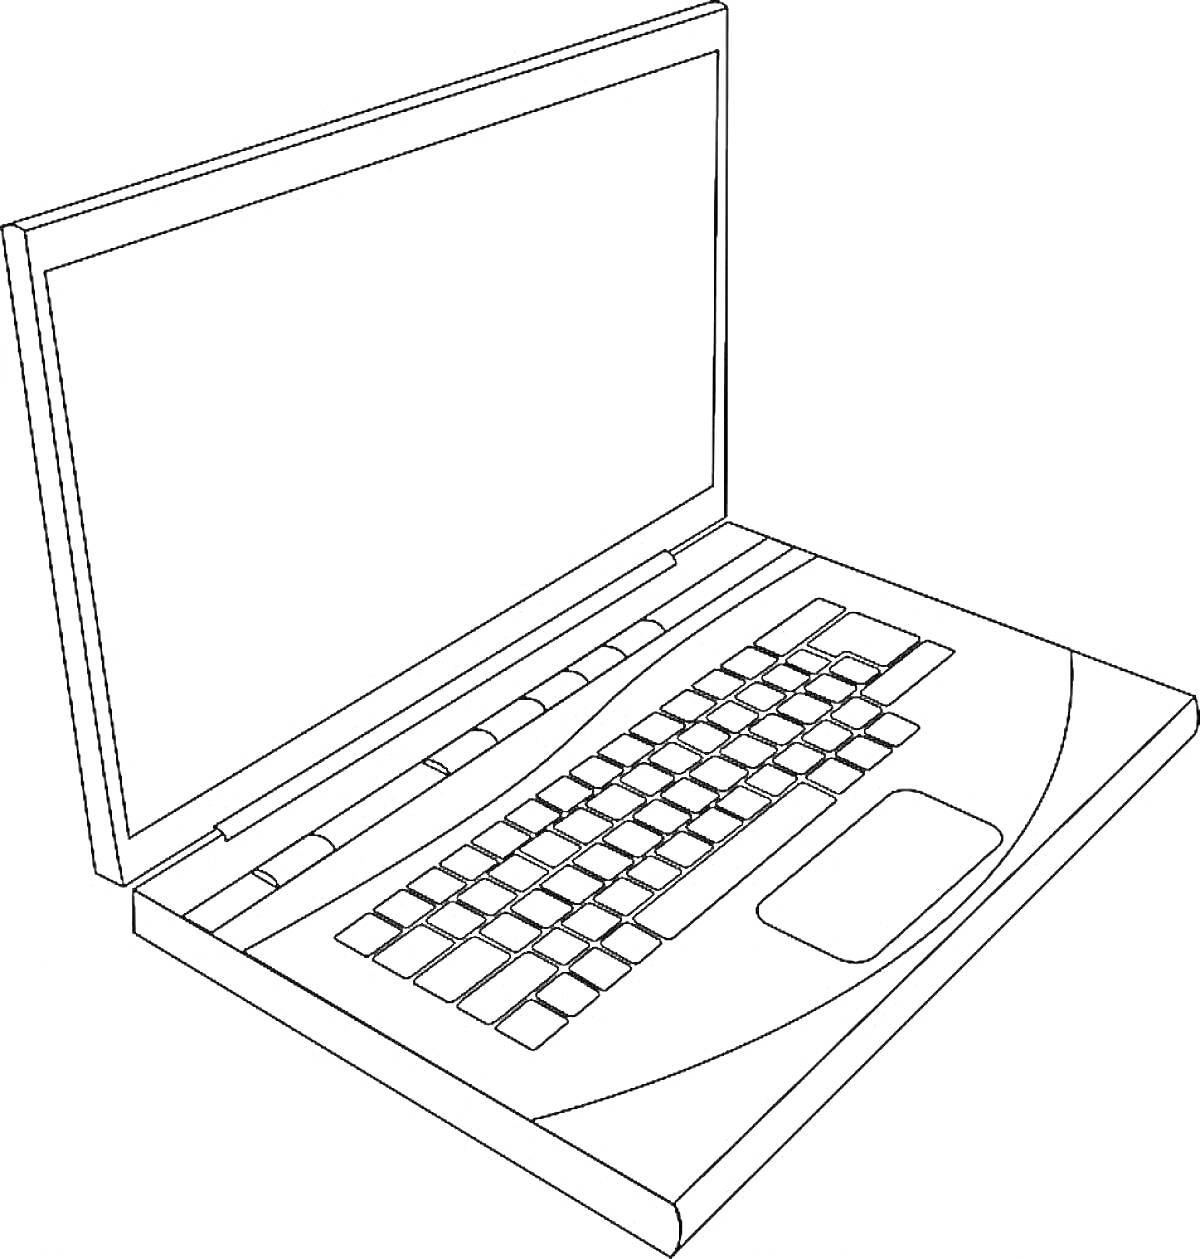 На раскраске изображено: Ноутбук, Компьютер, Экран, Клавиатура, Тачпад, Техника, Электроника